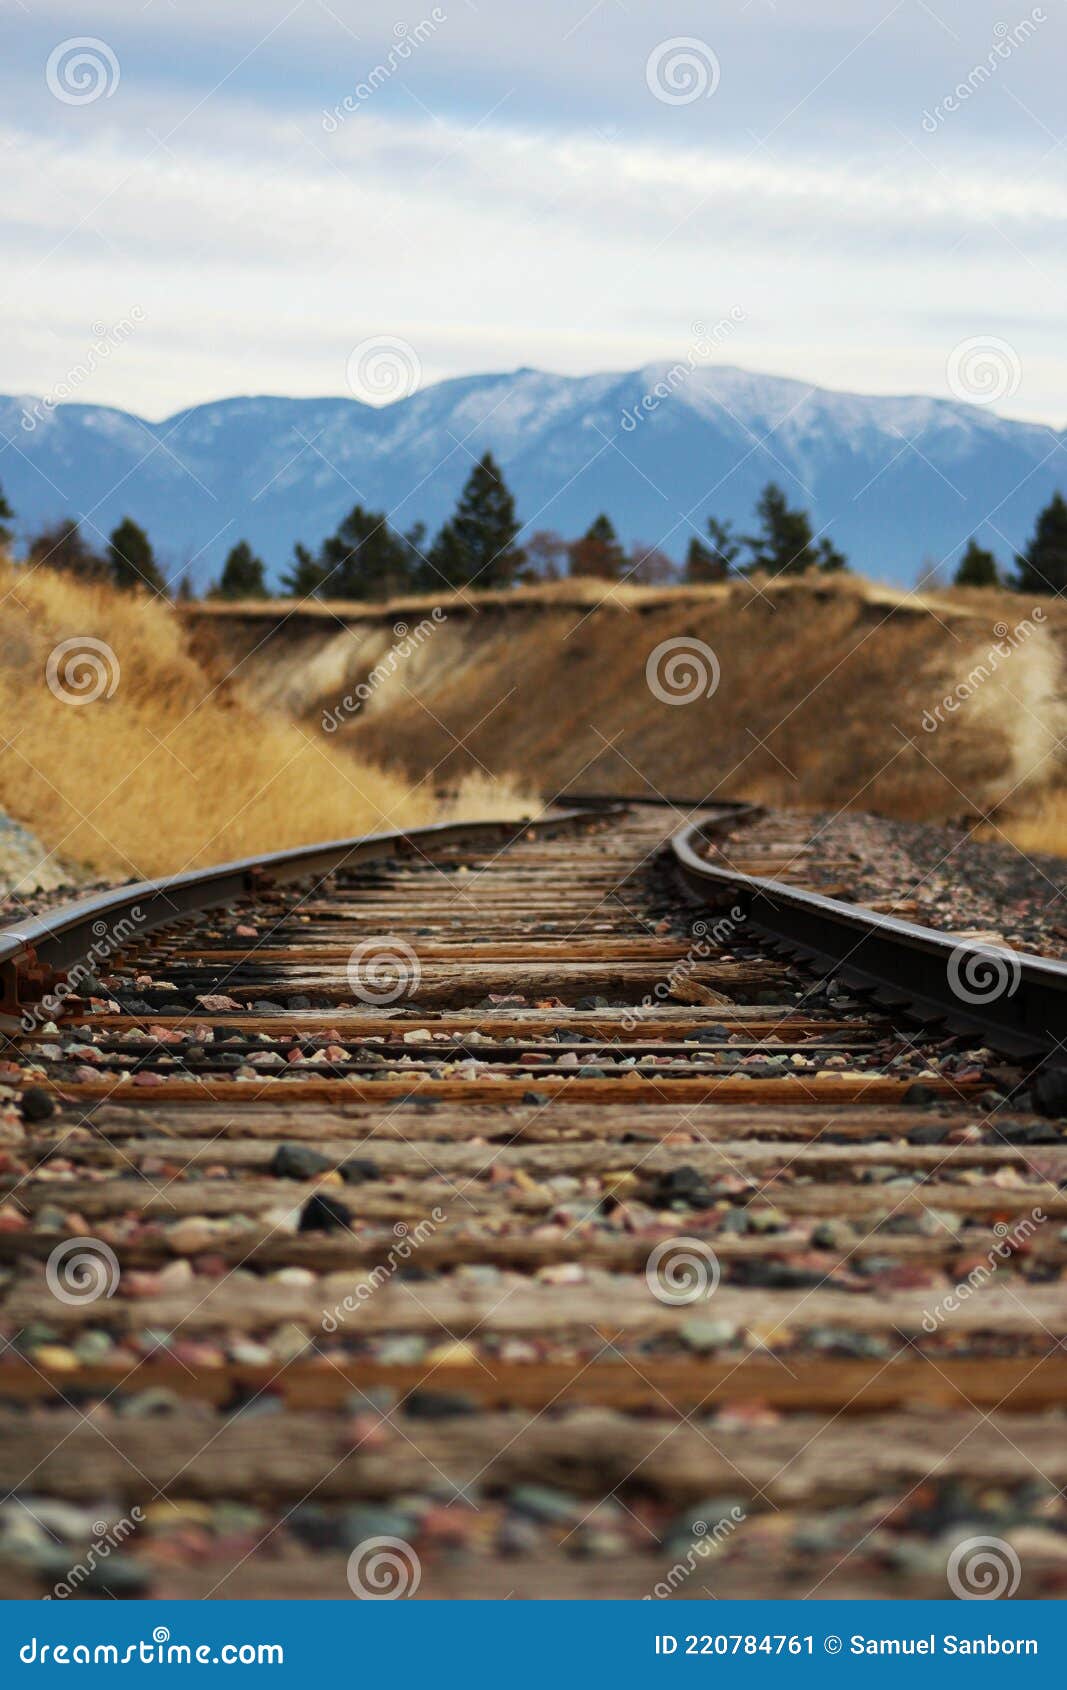 montana train tracks